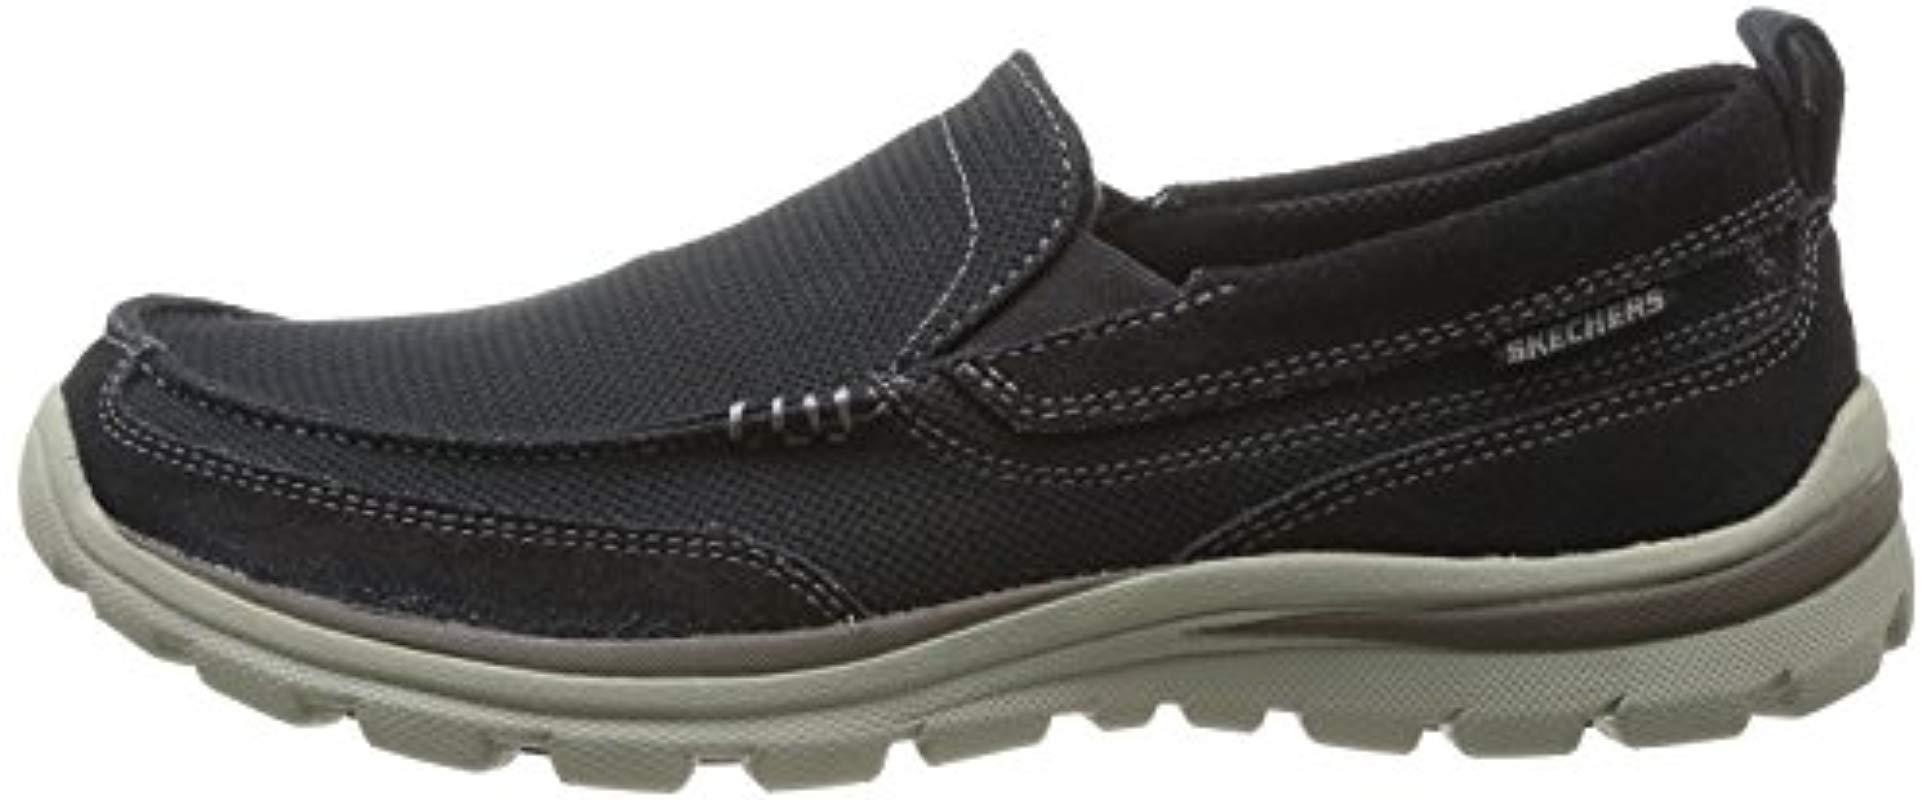 Skechers Superior Milford Slip-on Loafer in Black for Men - Save 13% - Lyst